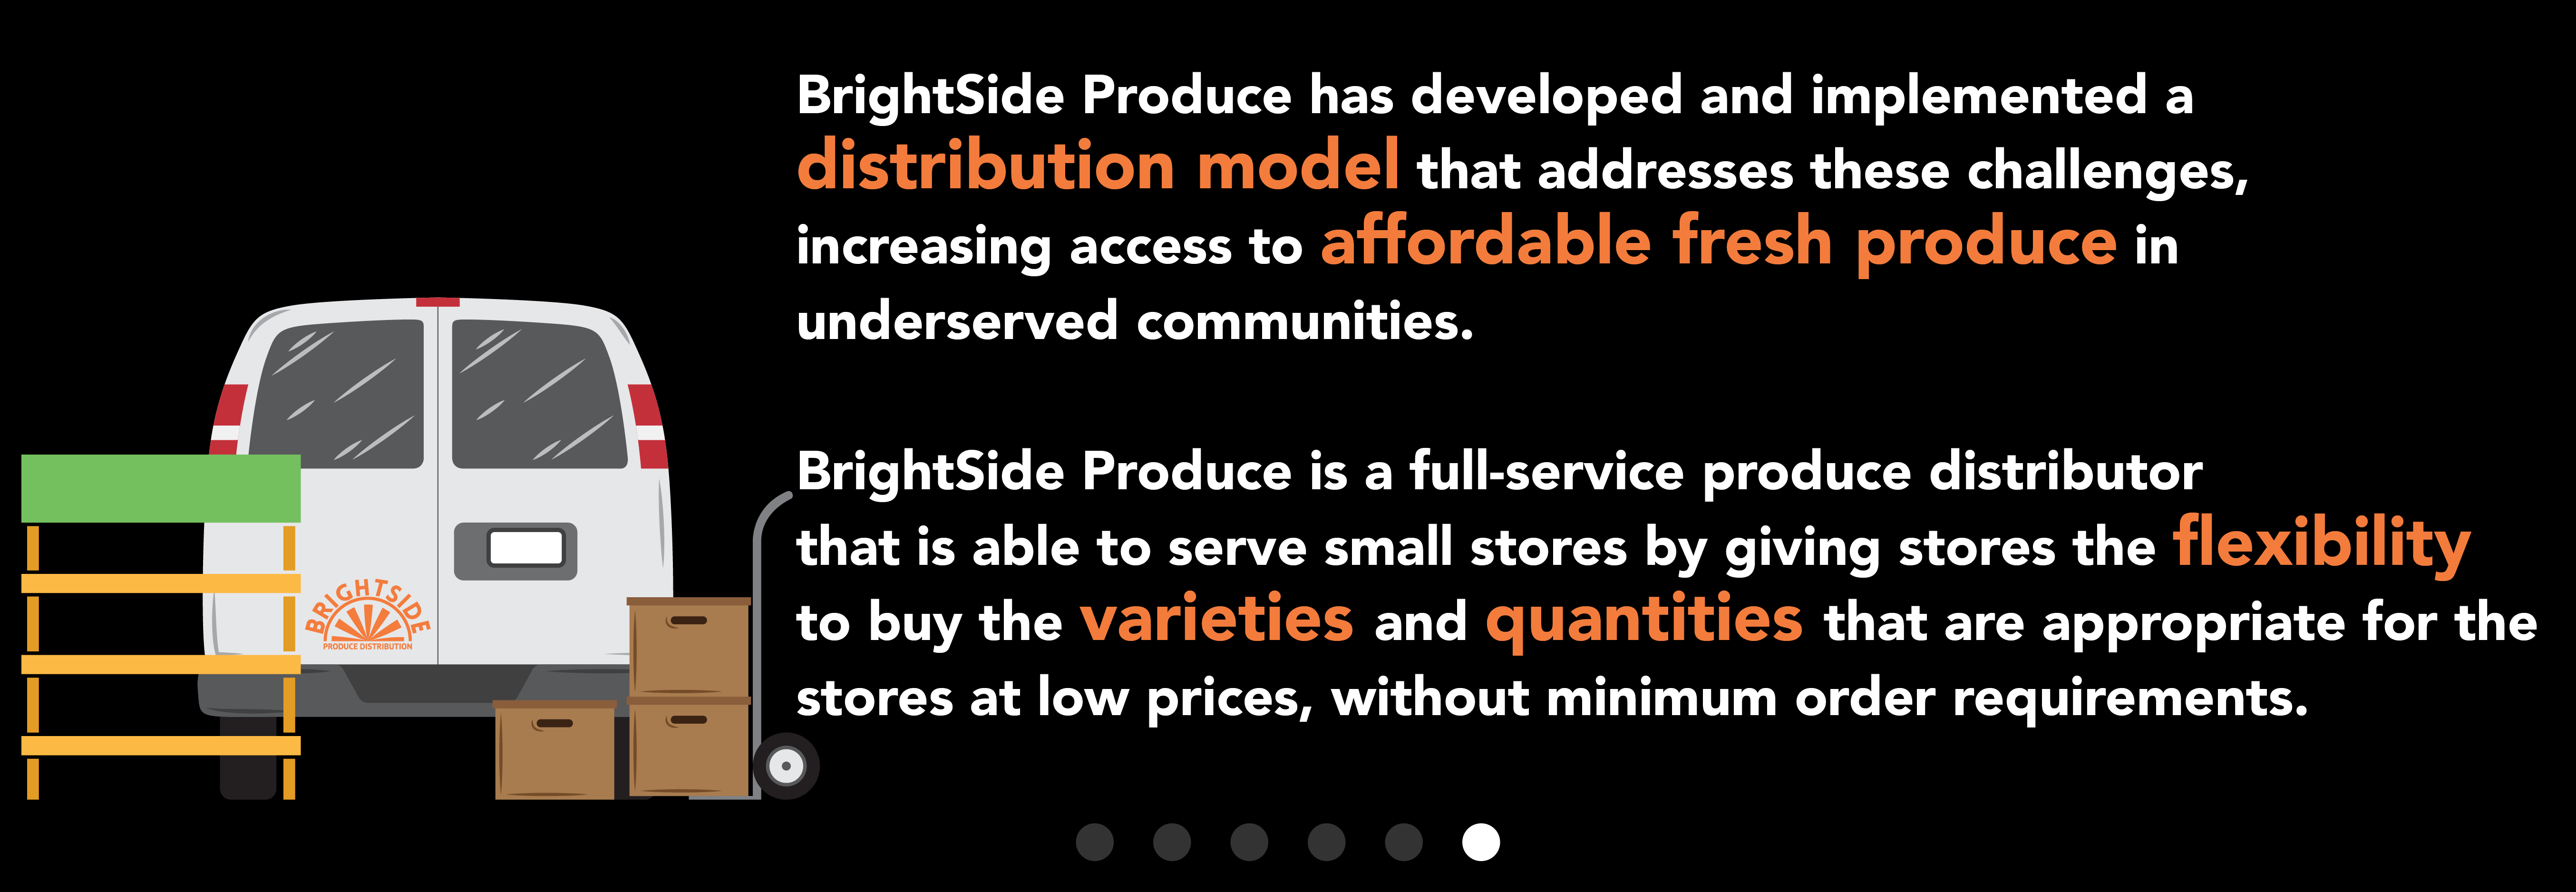 brightside produce distribution model